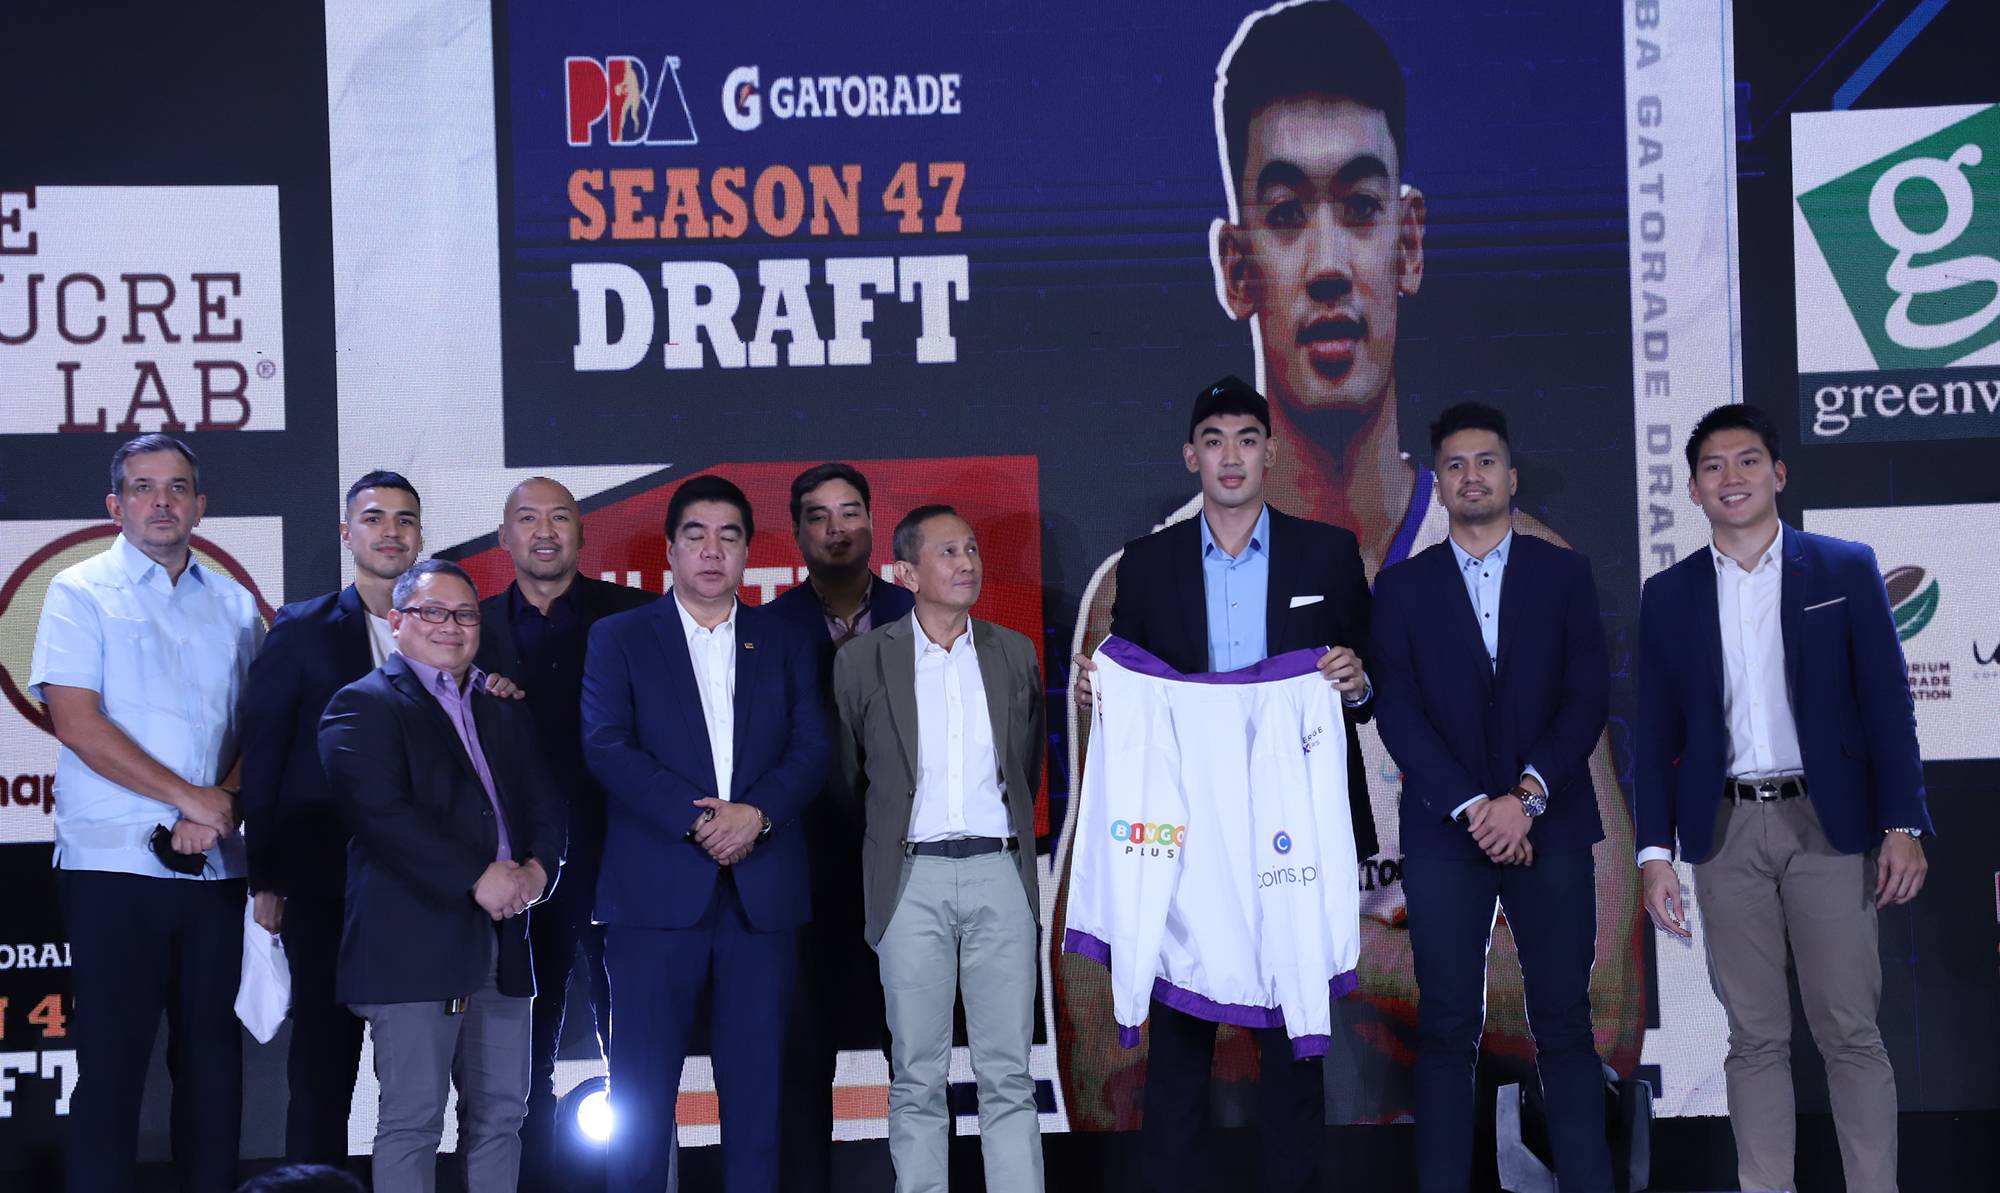 2022-PBA-Draft-Converge-Justin-Arana Ambohot did not expect being third pick in PBA Draft Basketball CSJL NCAA News PBA  - philippine sports news